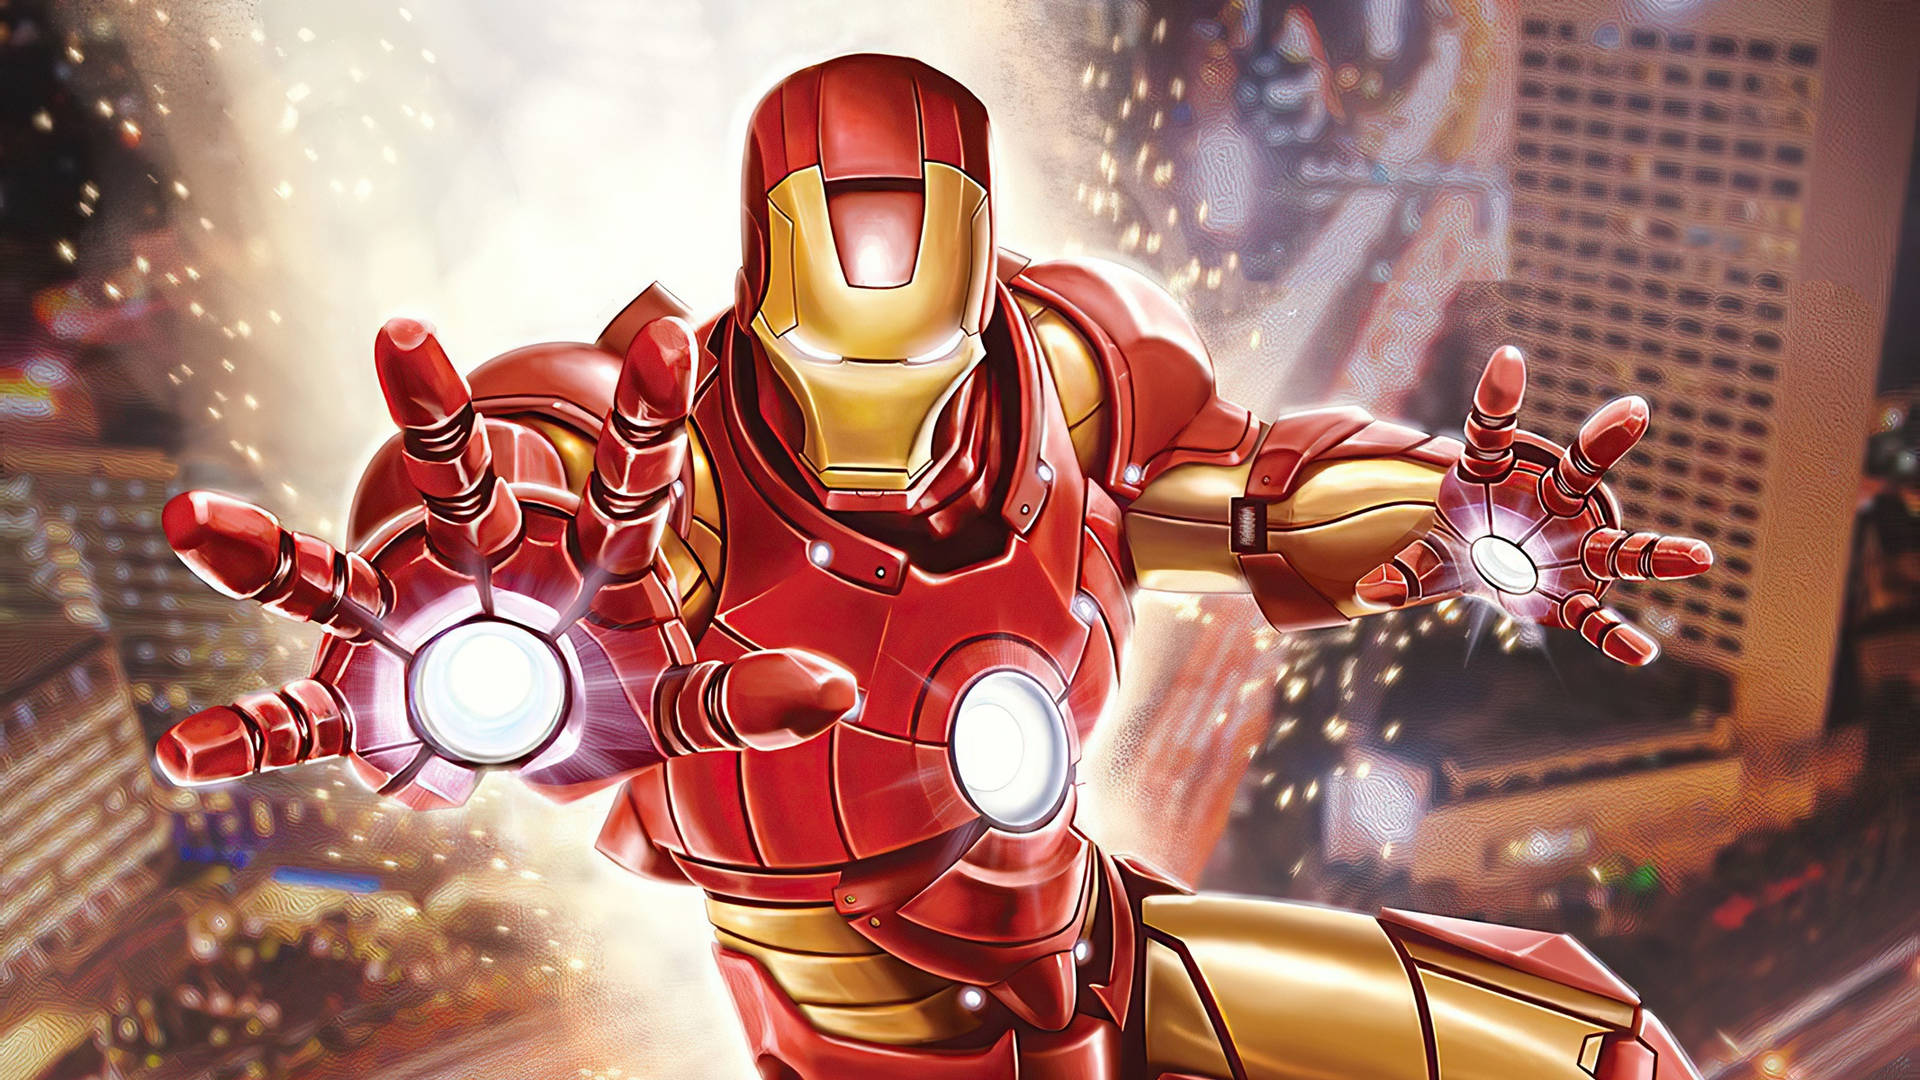 Iron Man Superhero Digital Fan Art Wallpaper